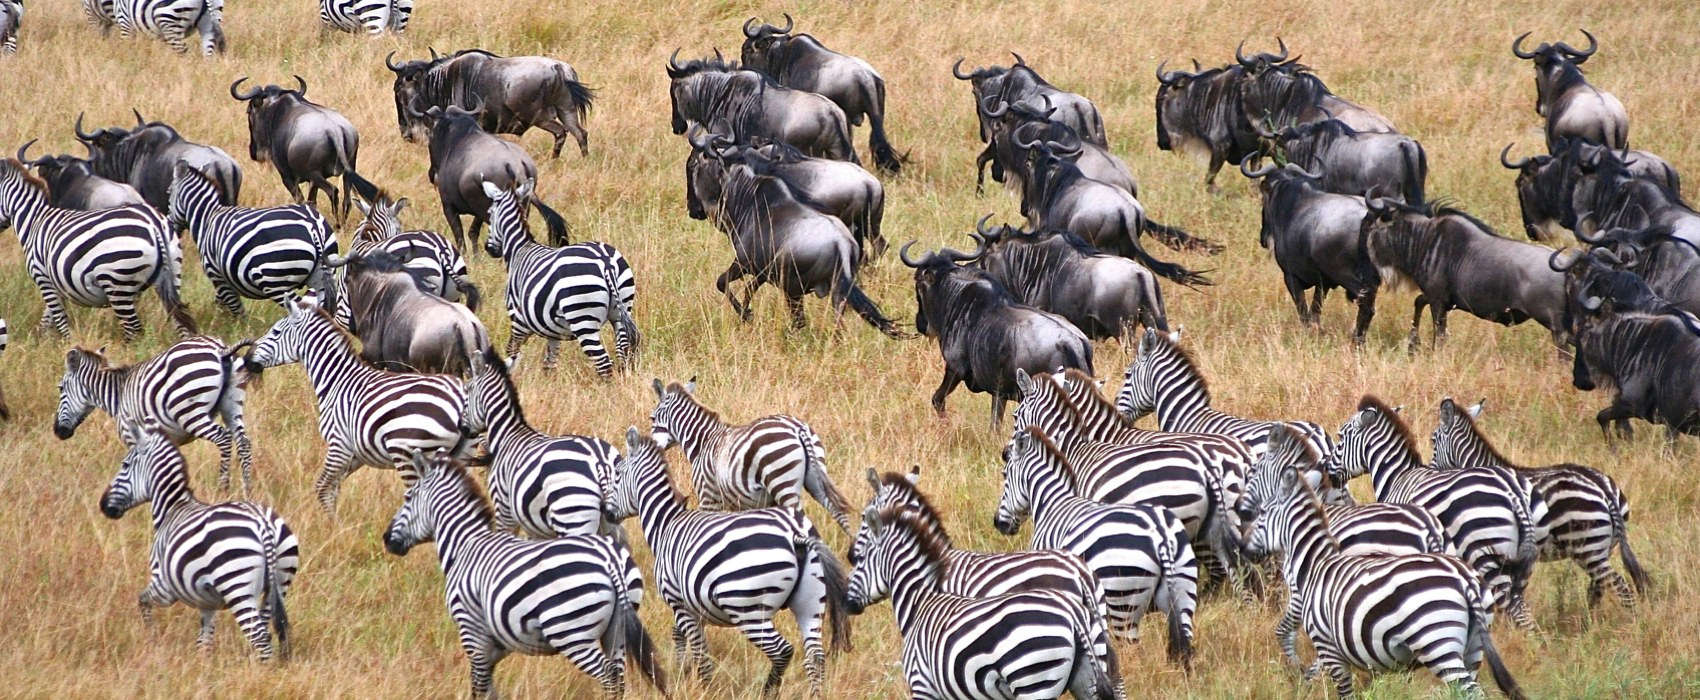 Wildebeest Migration Safari holidays